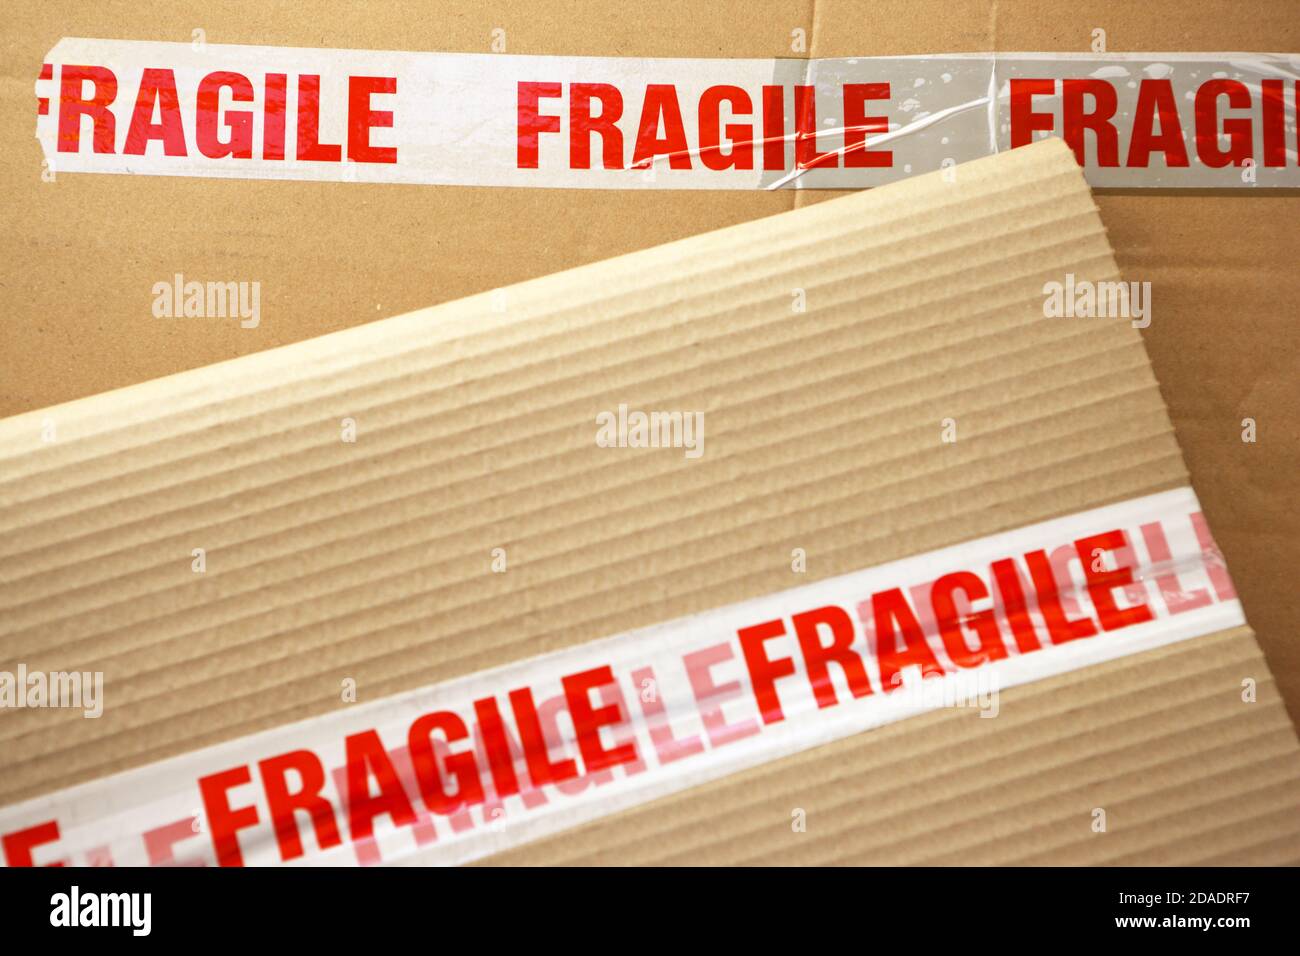 Fragile tape on cardboard packaging Stock Photo